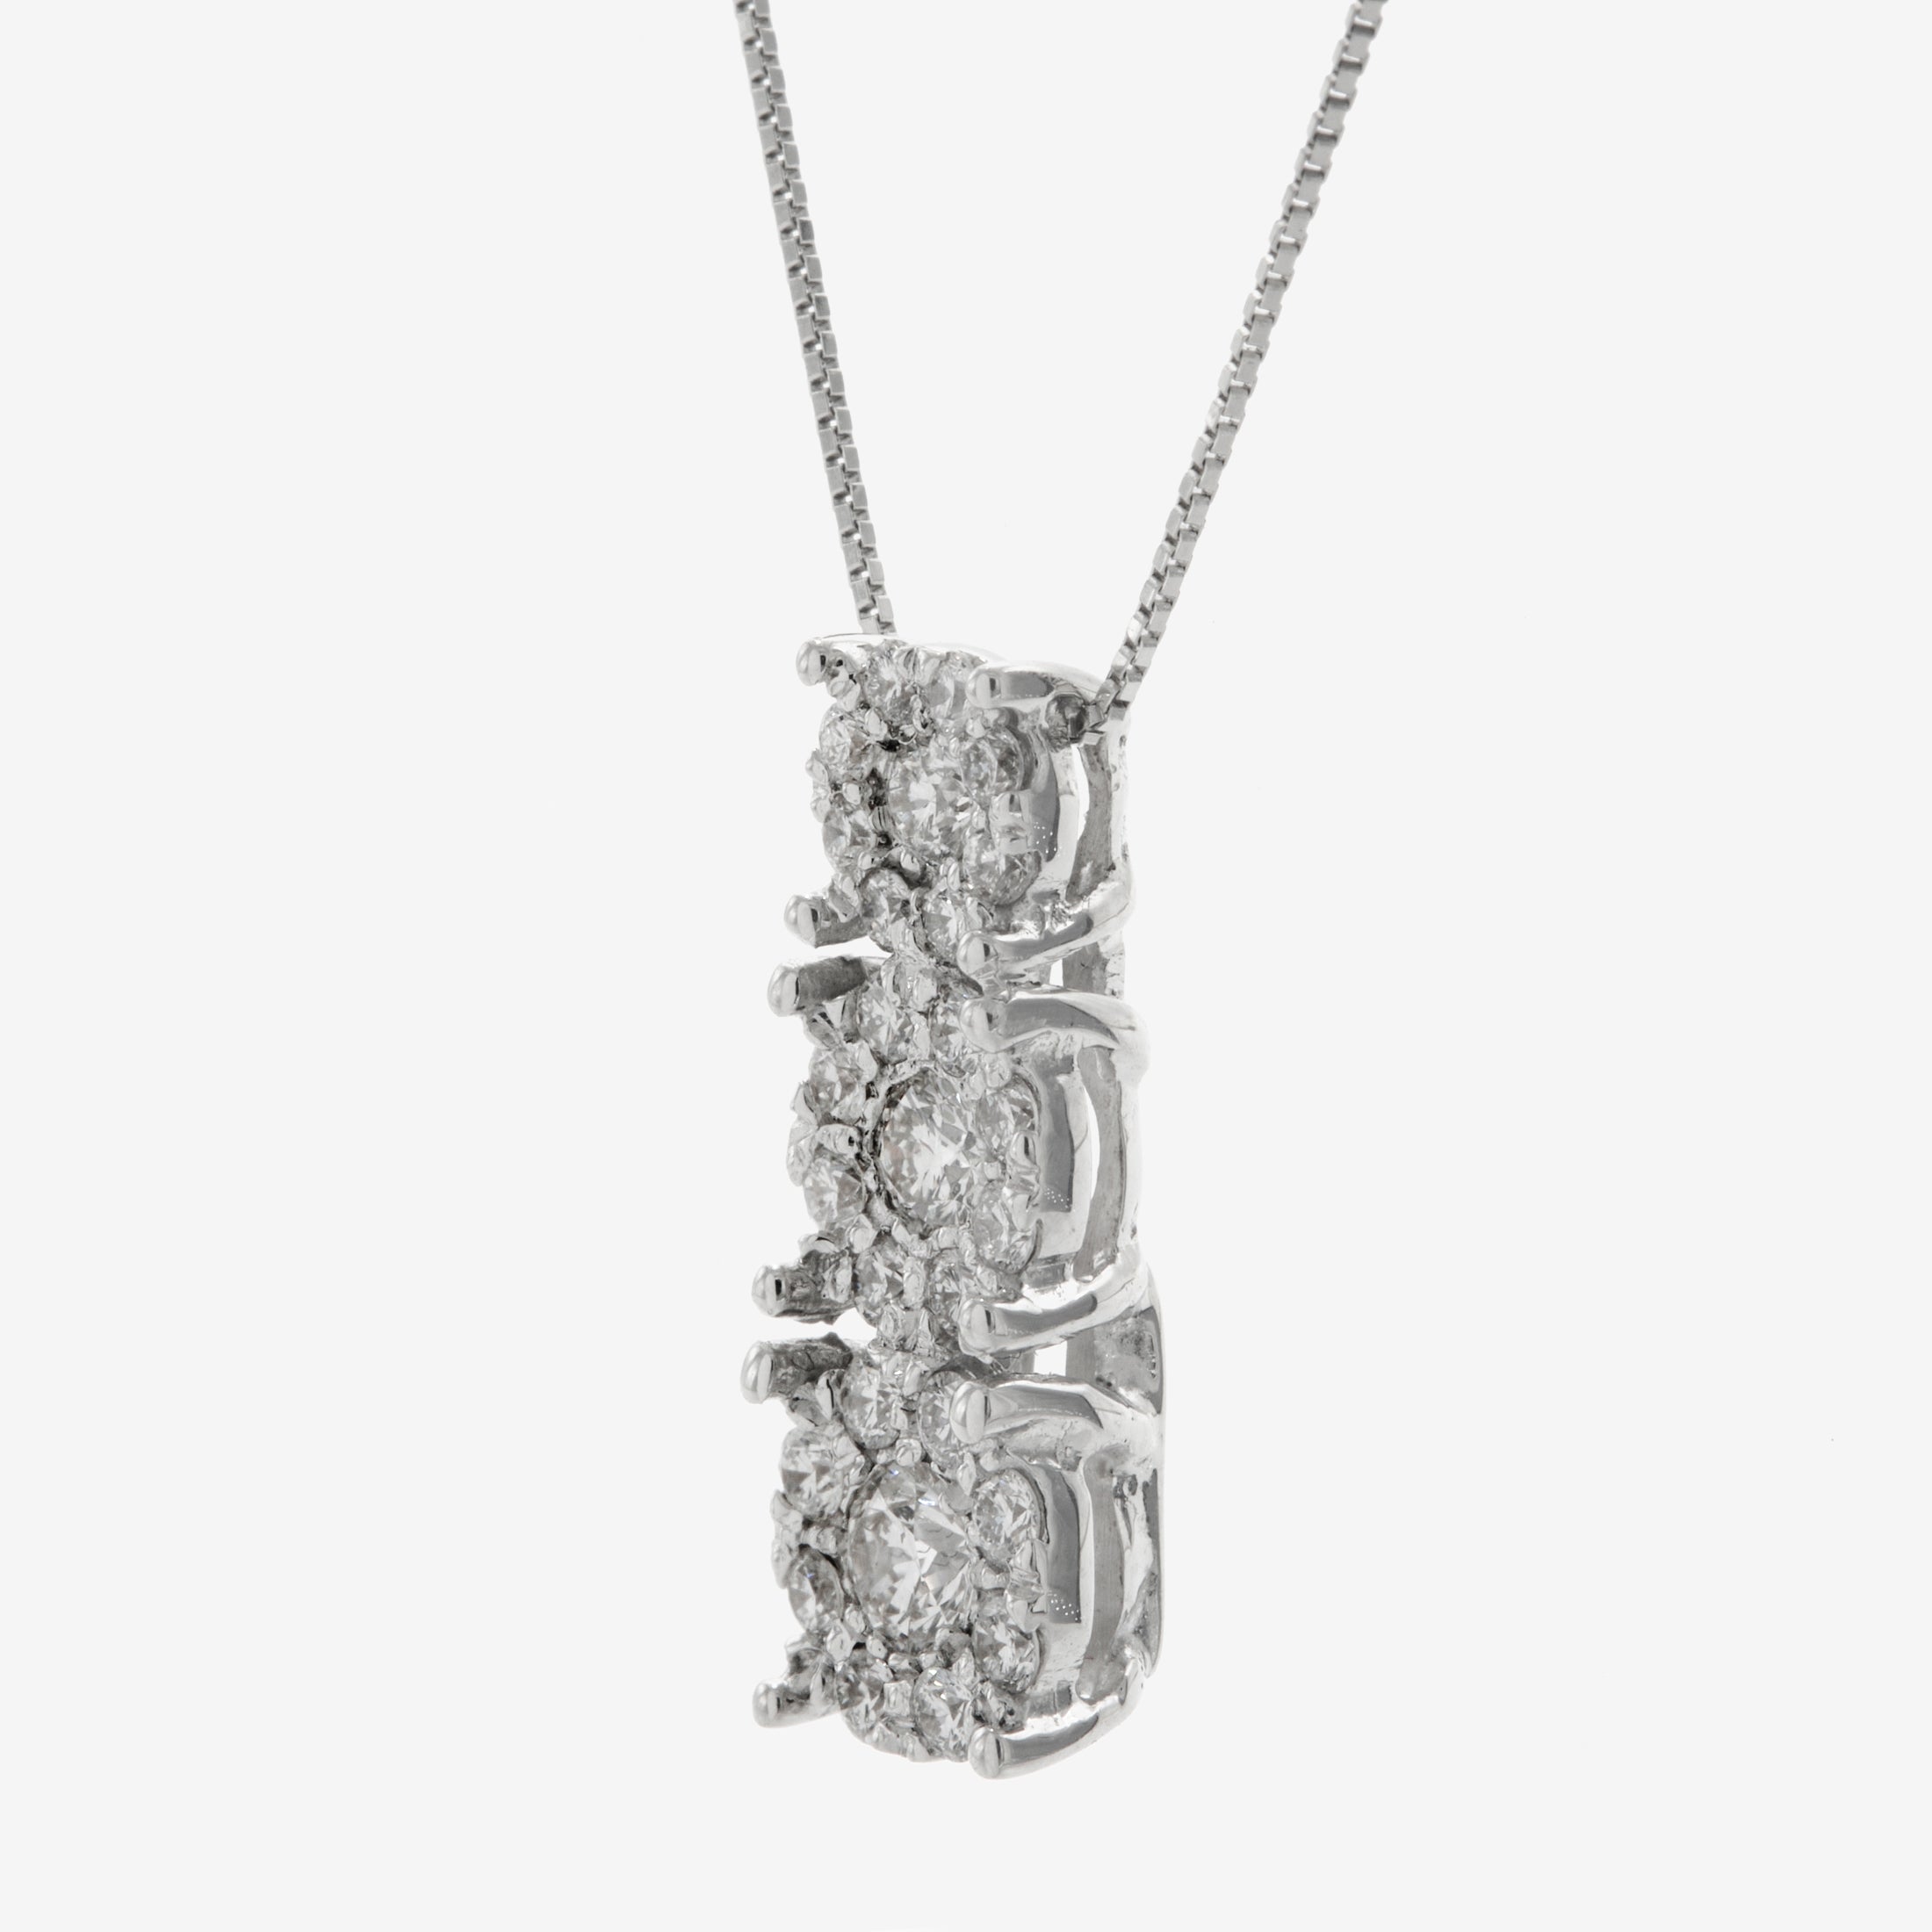 Elam necklace with diamonds